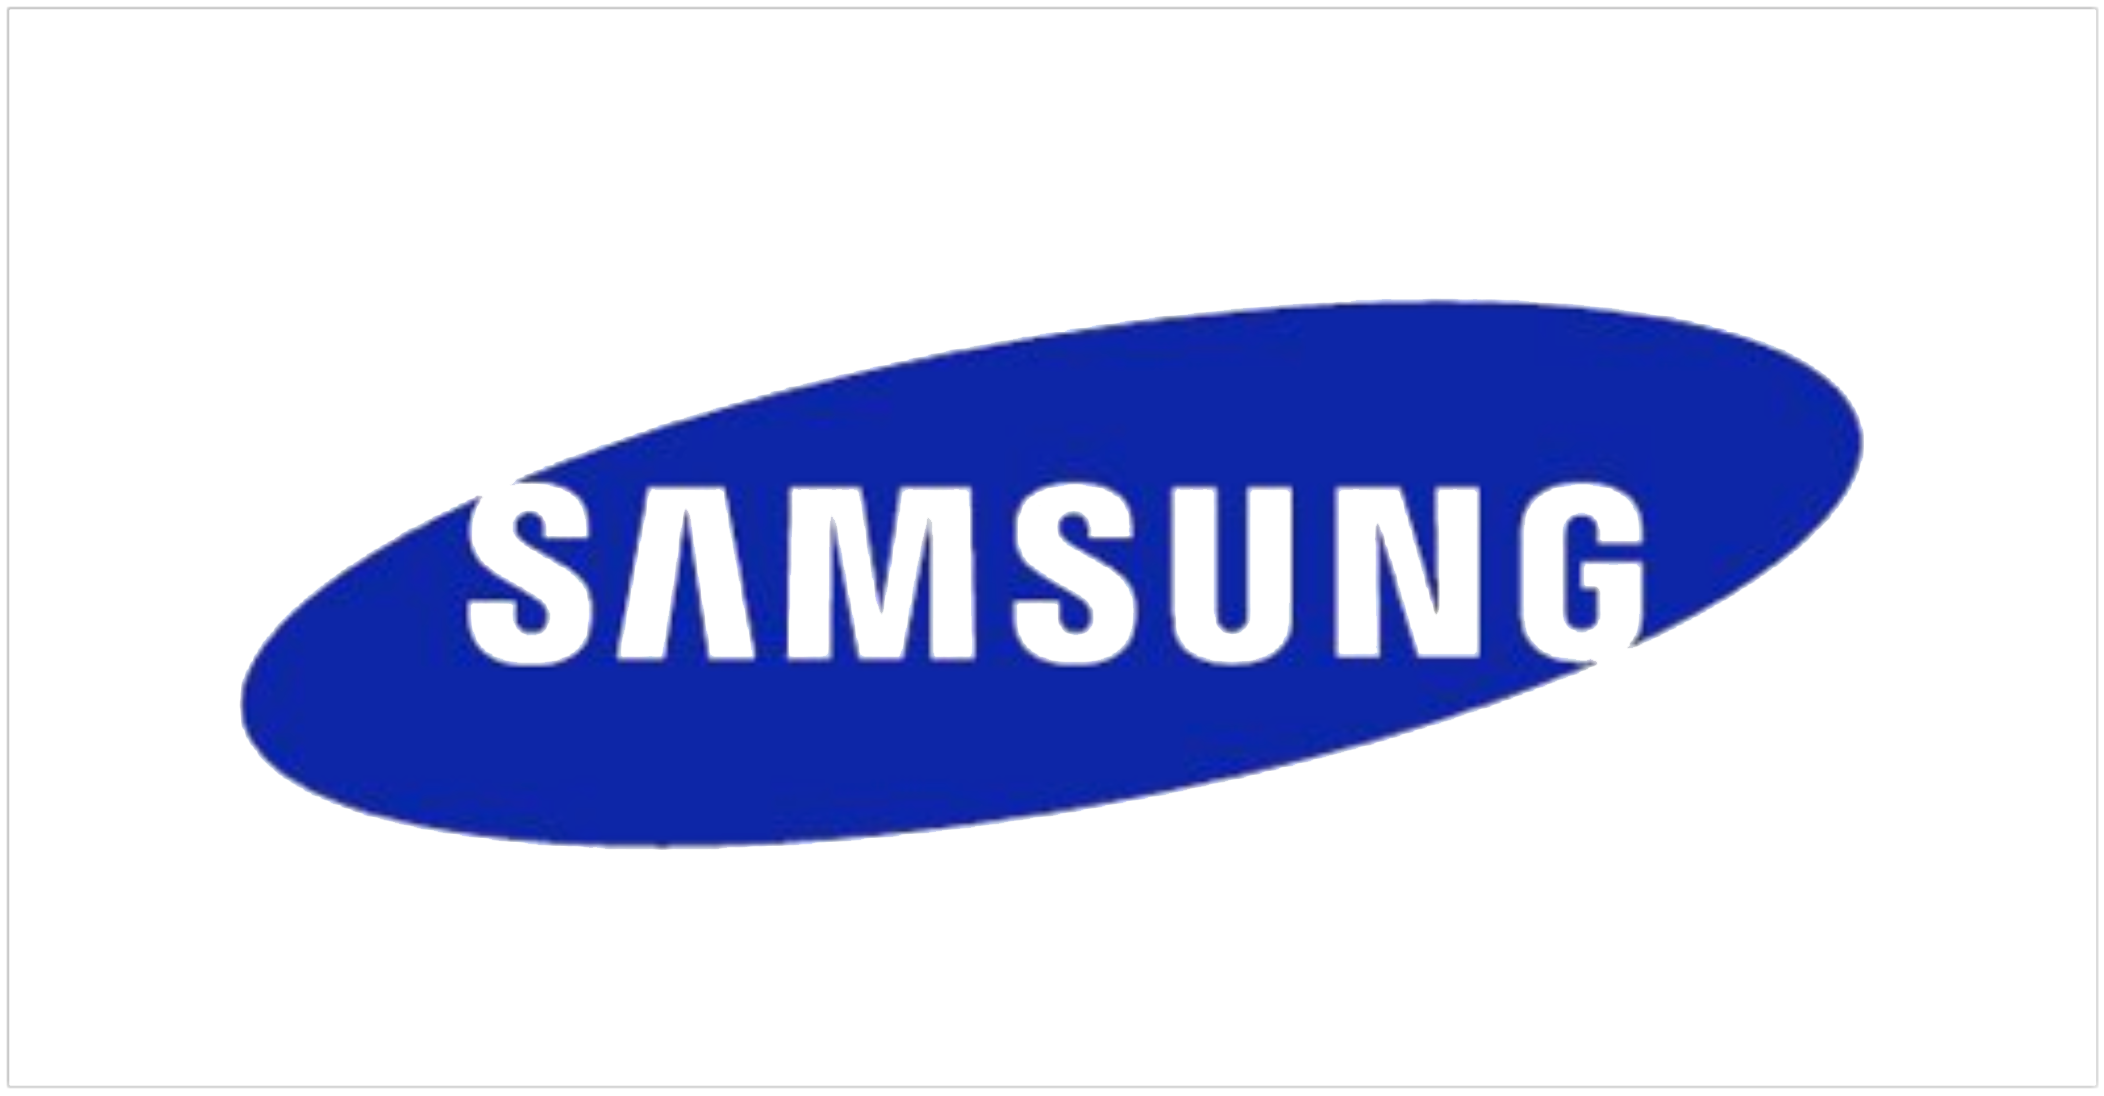 SSD M.2 NVMe SAMSUNG 990 PRO 1To - infinytech-reunion